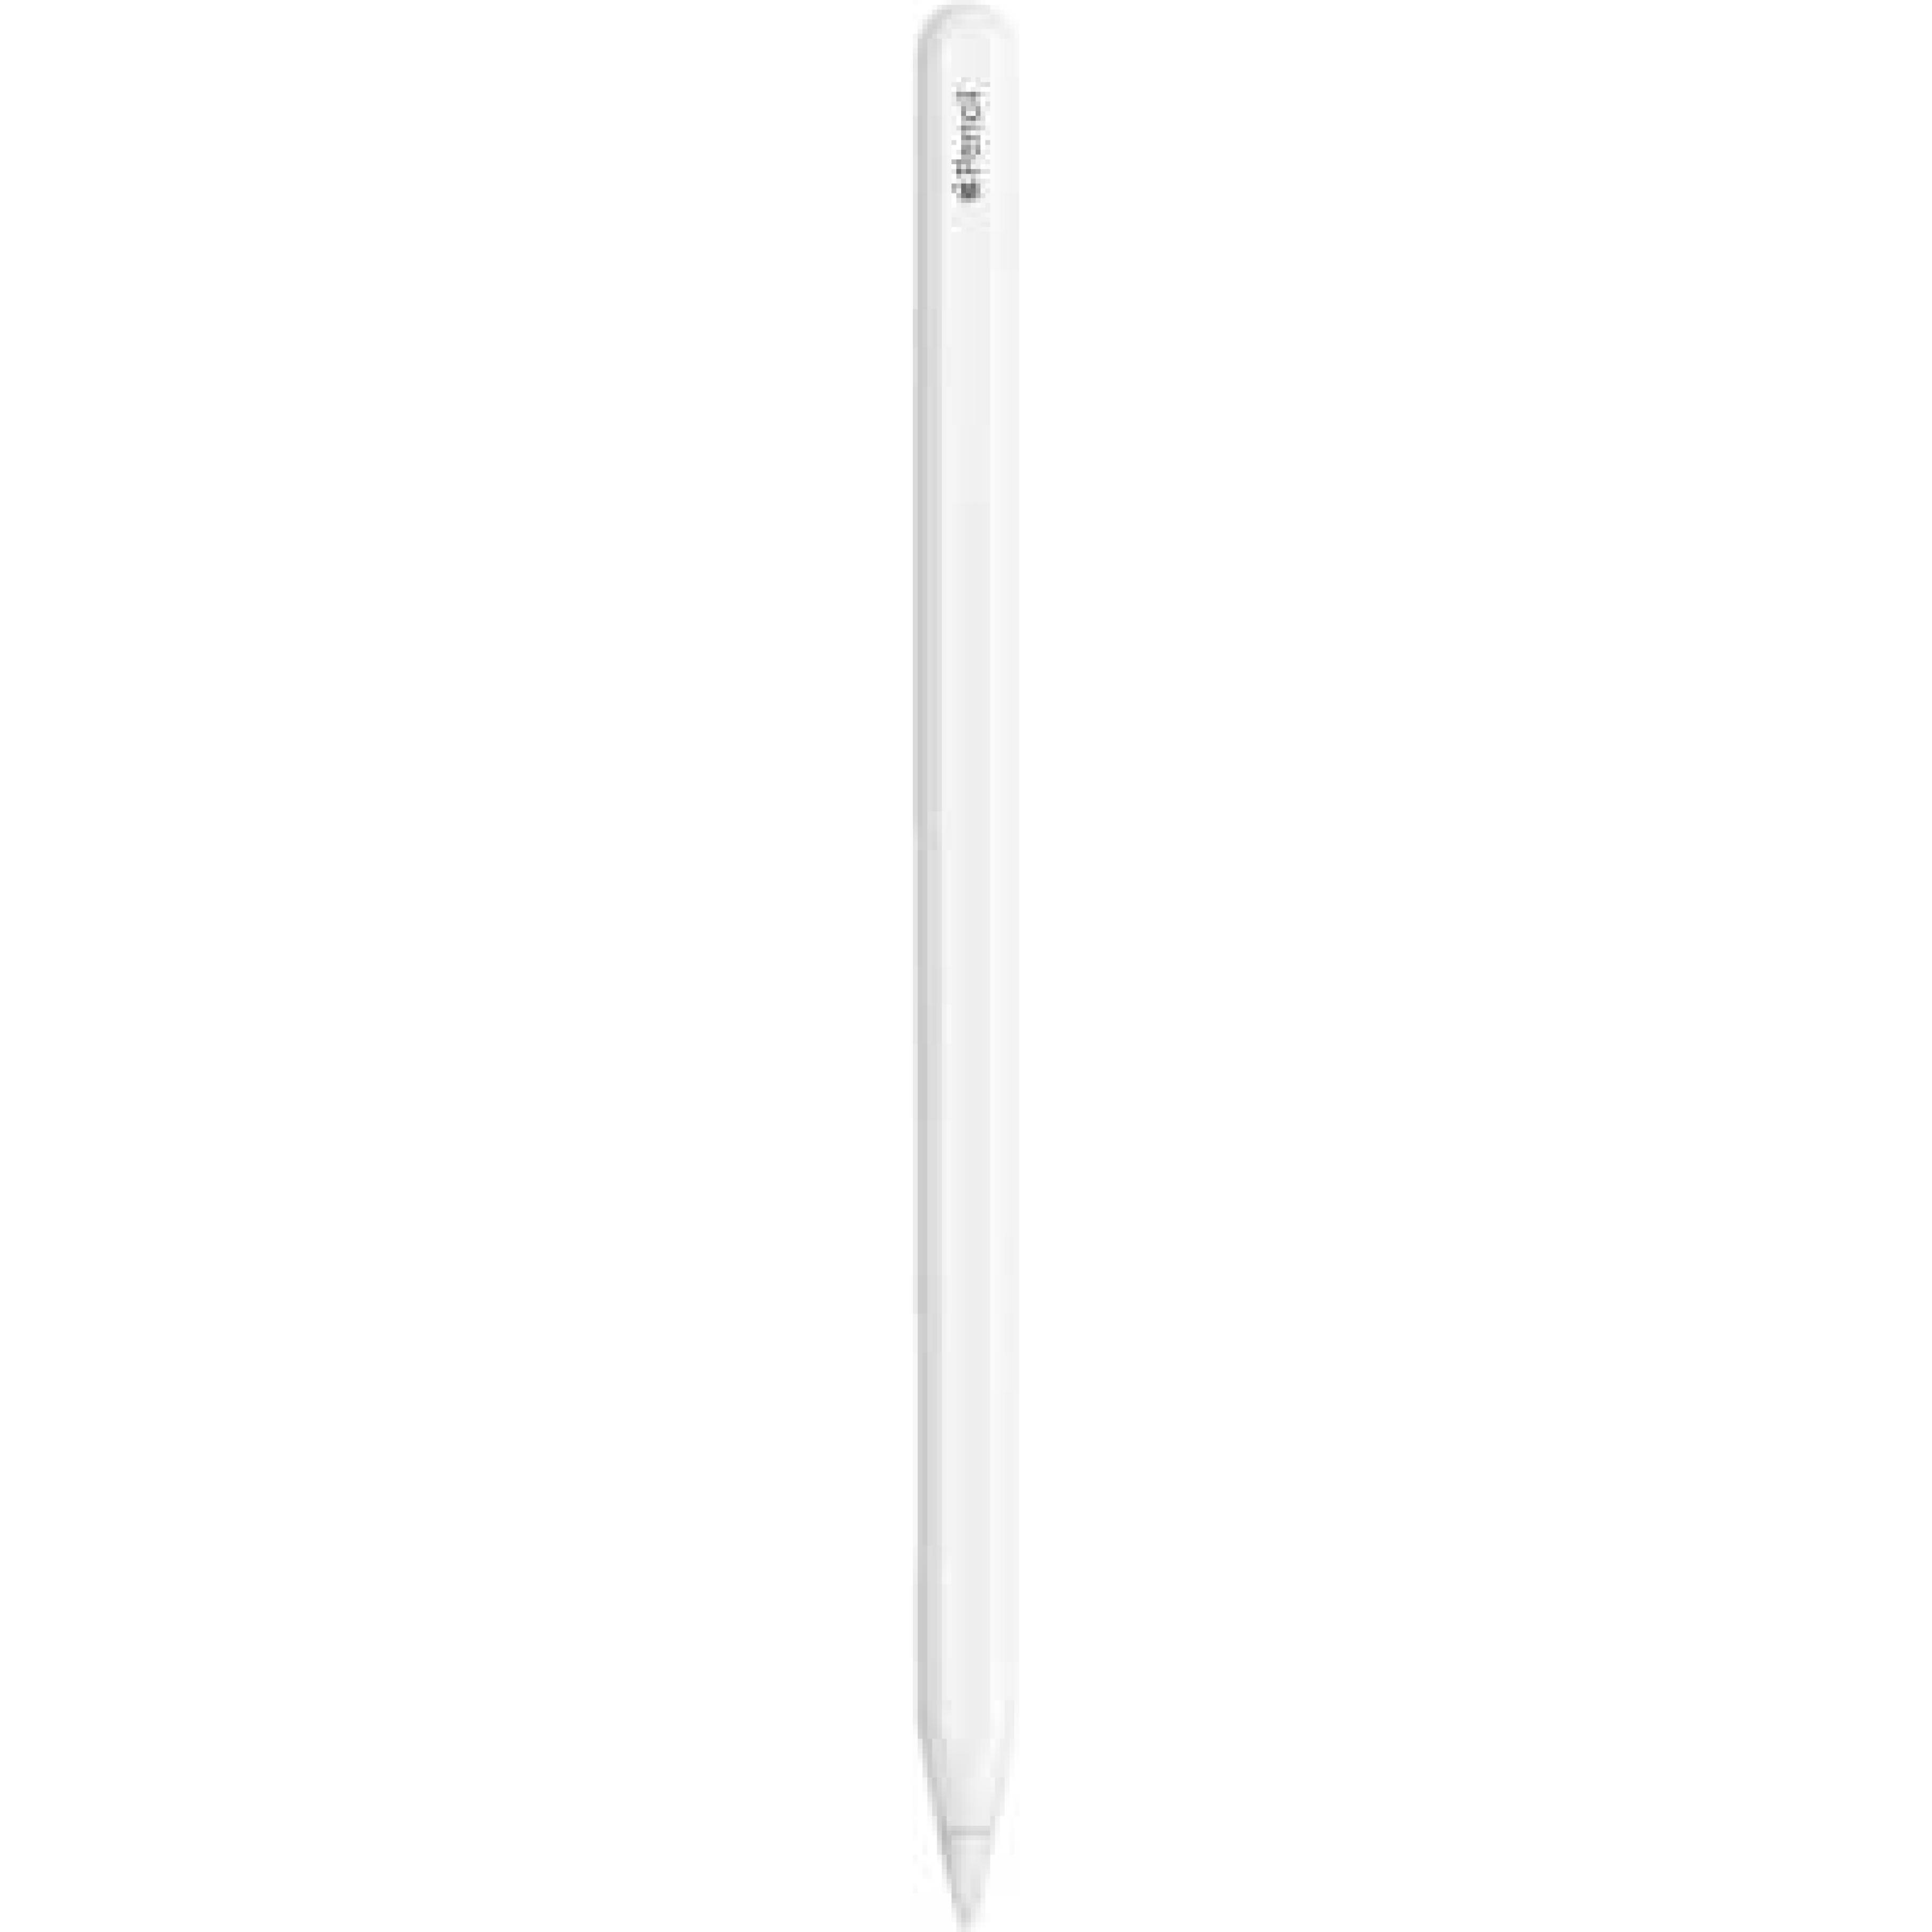 Apple Pencil 2.Generation